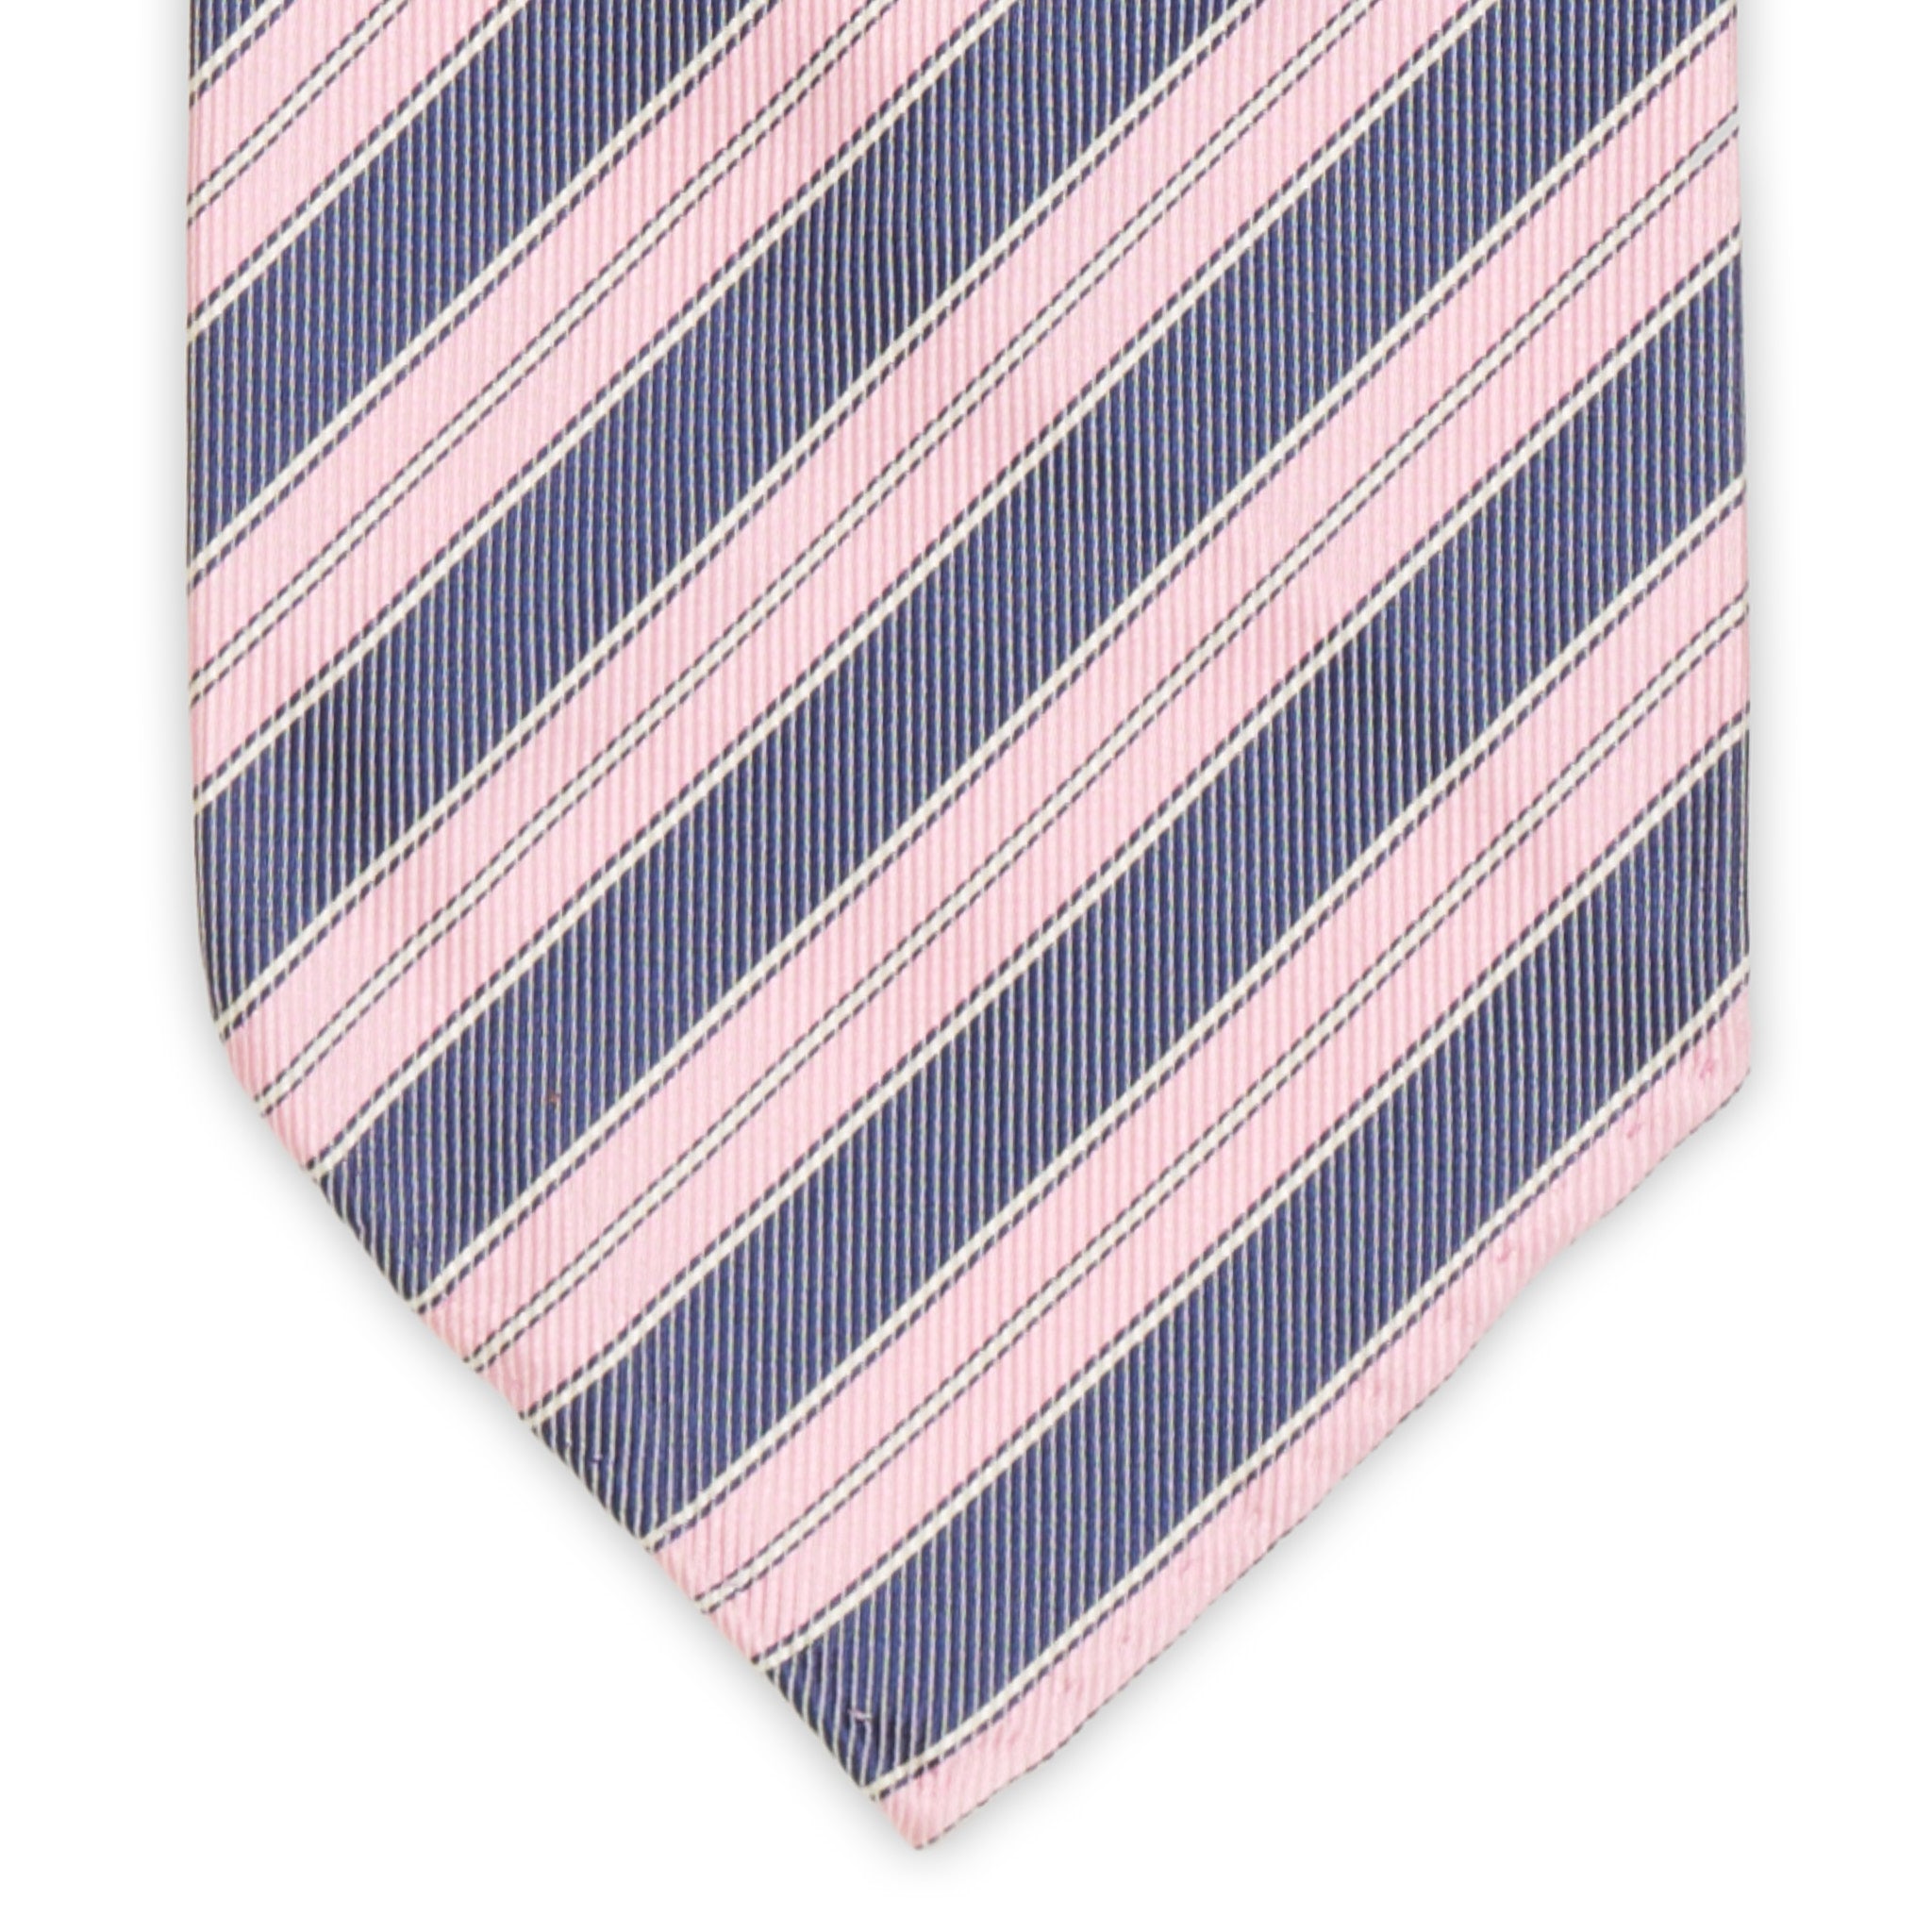 CESARE ATTOLINI Handmade Blue-Pink Striped Design Silk Tie NEW